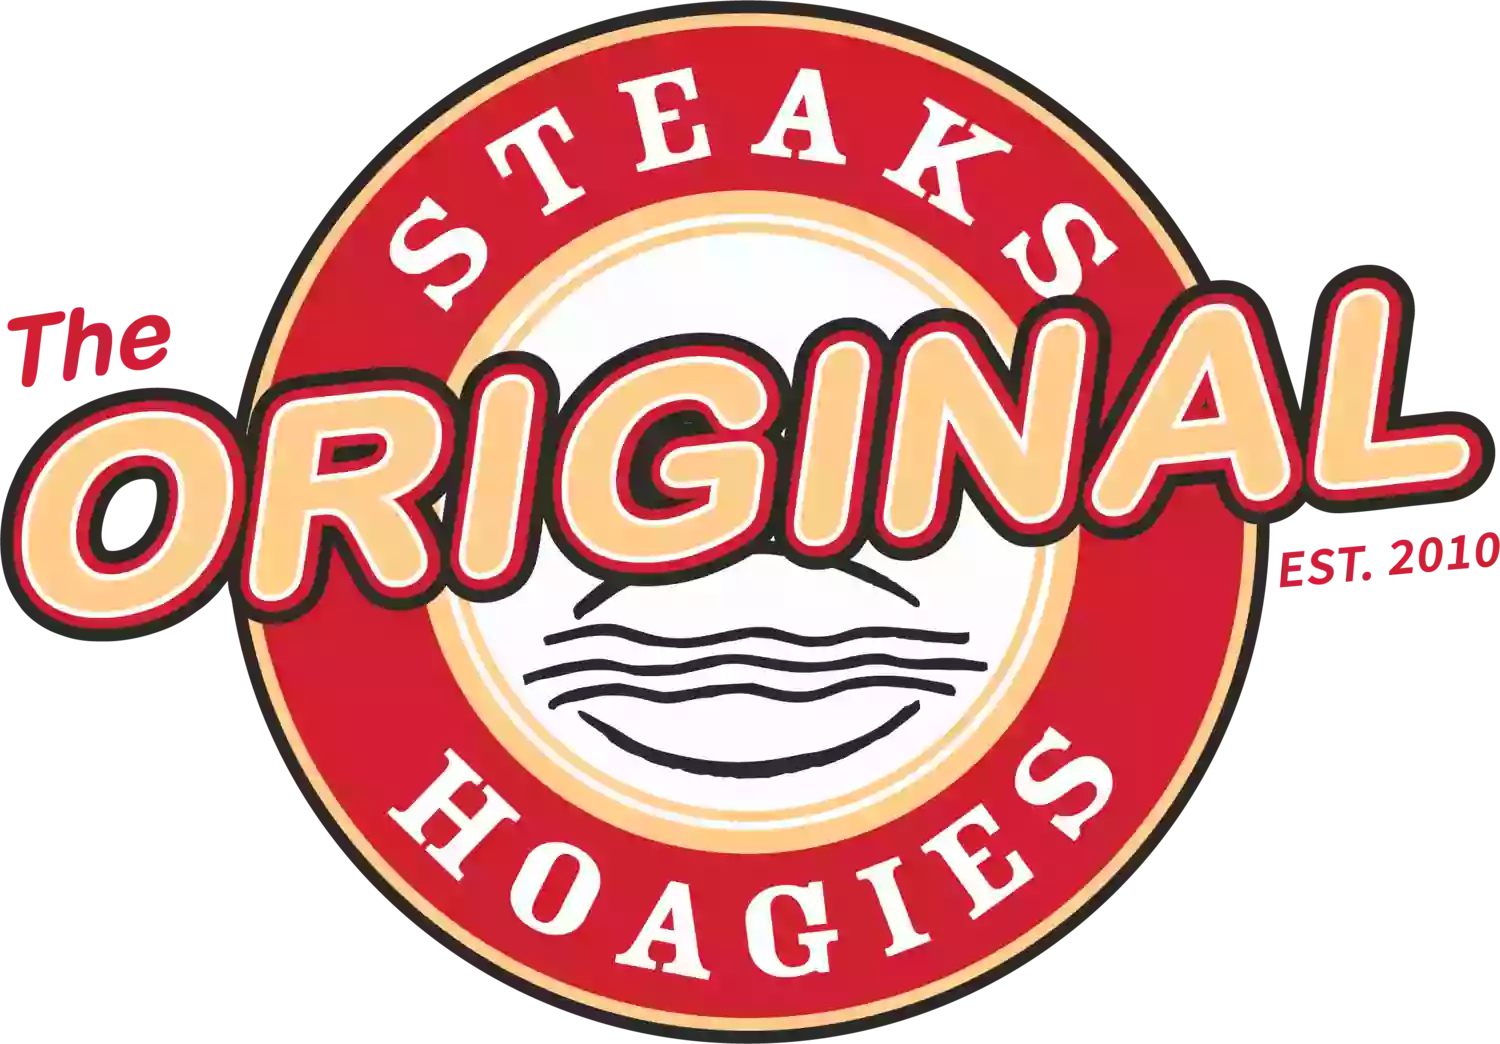 The Original Steaks and Hoagies - Parma